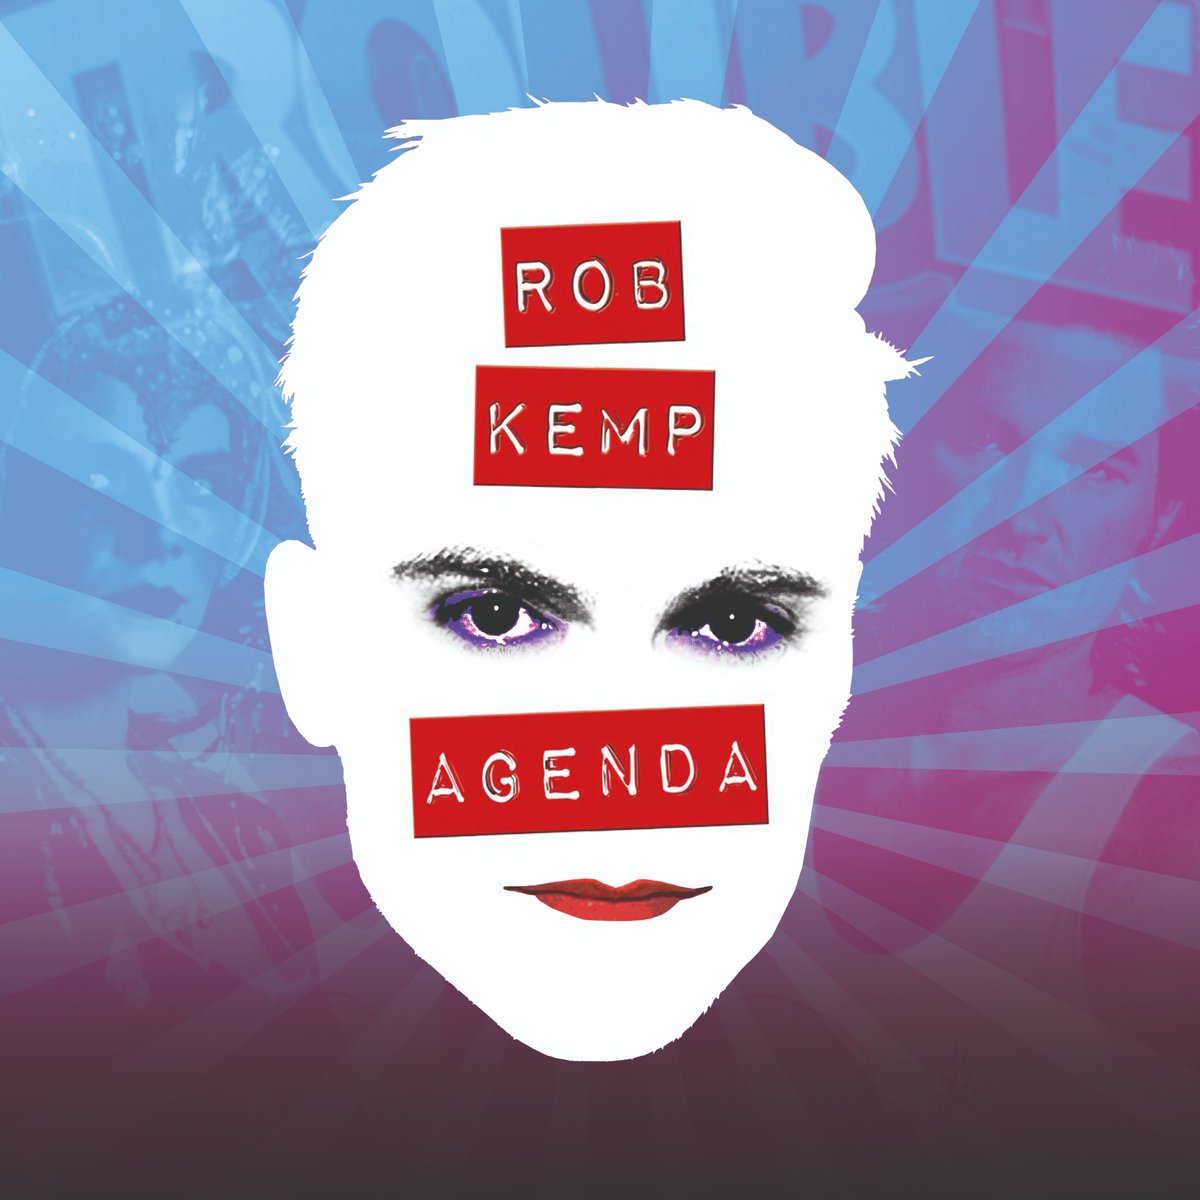 SAT 14 OCTOBER - Edinburgh Comedy Award nominee @robotkemp comes to @AlmaBristol with his incredible show Agenda! “Agenda kicks ass” ★★★★ Chortle⁠
chucklebusters.com/events/rob-kem…